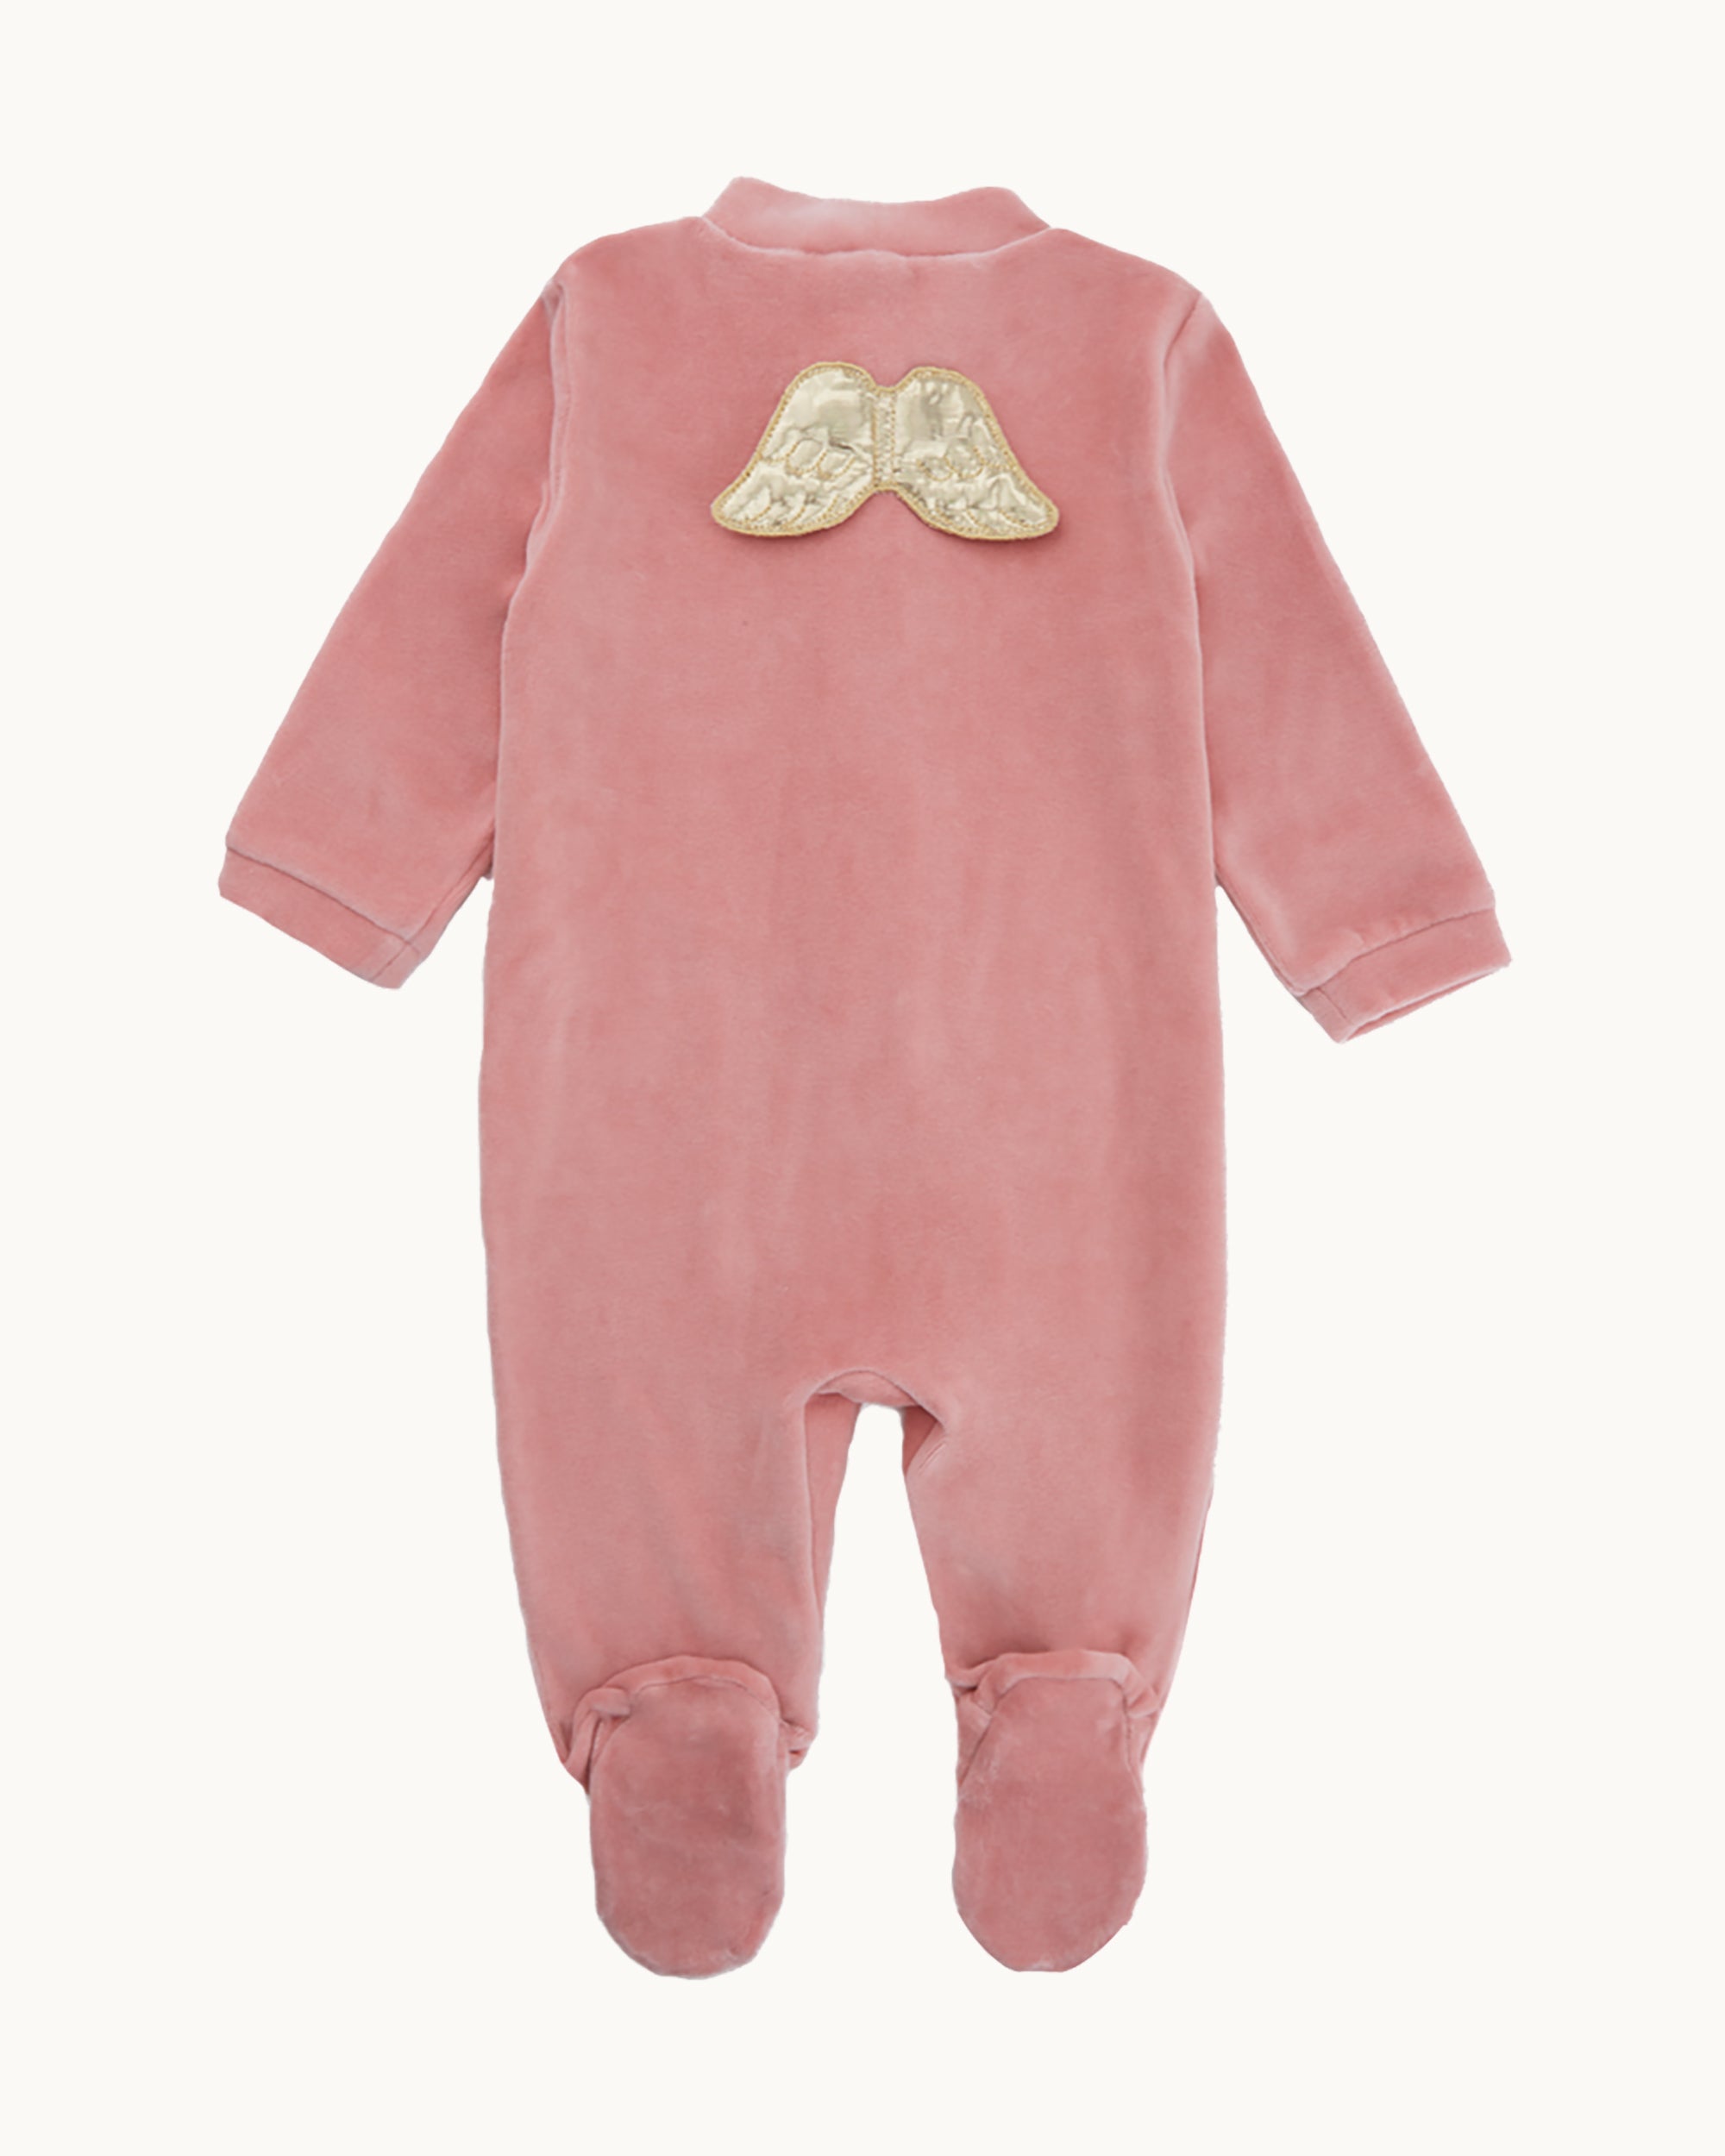 Baby Bedtime Gift Set - Pink